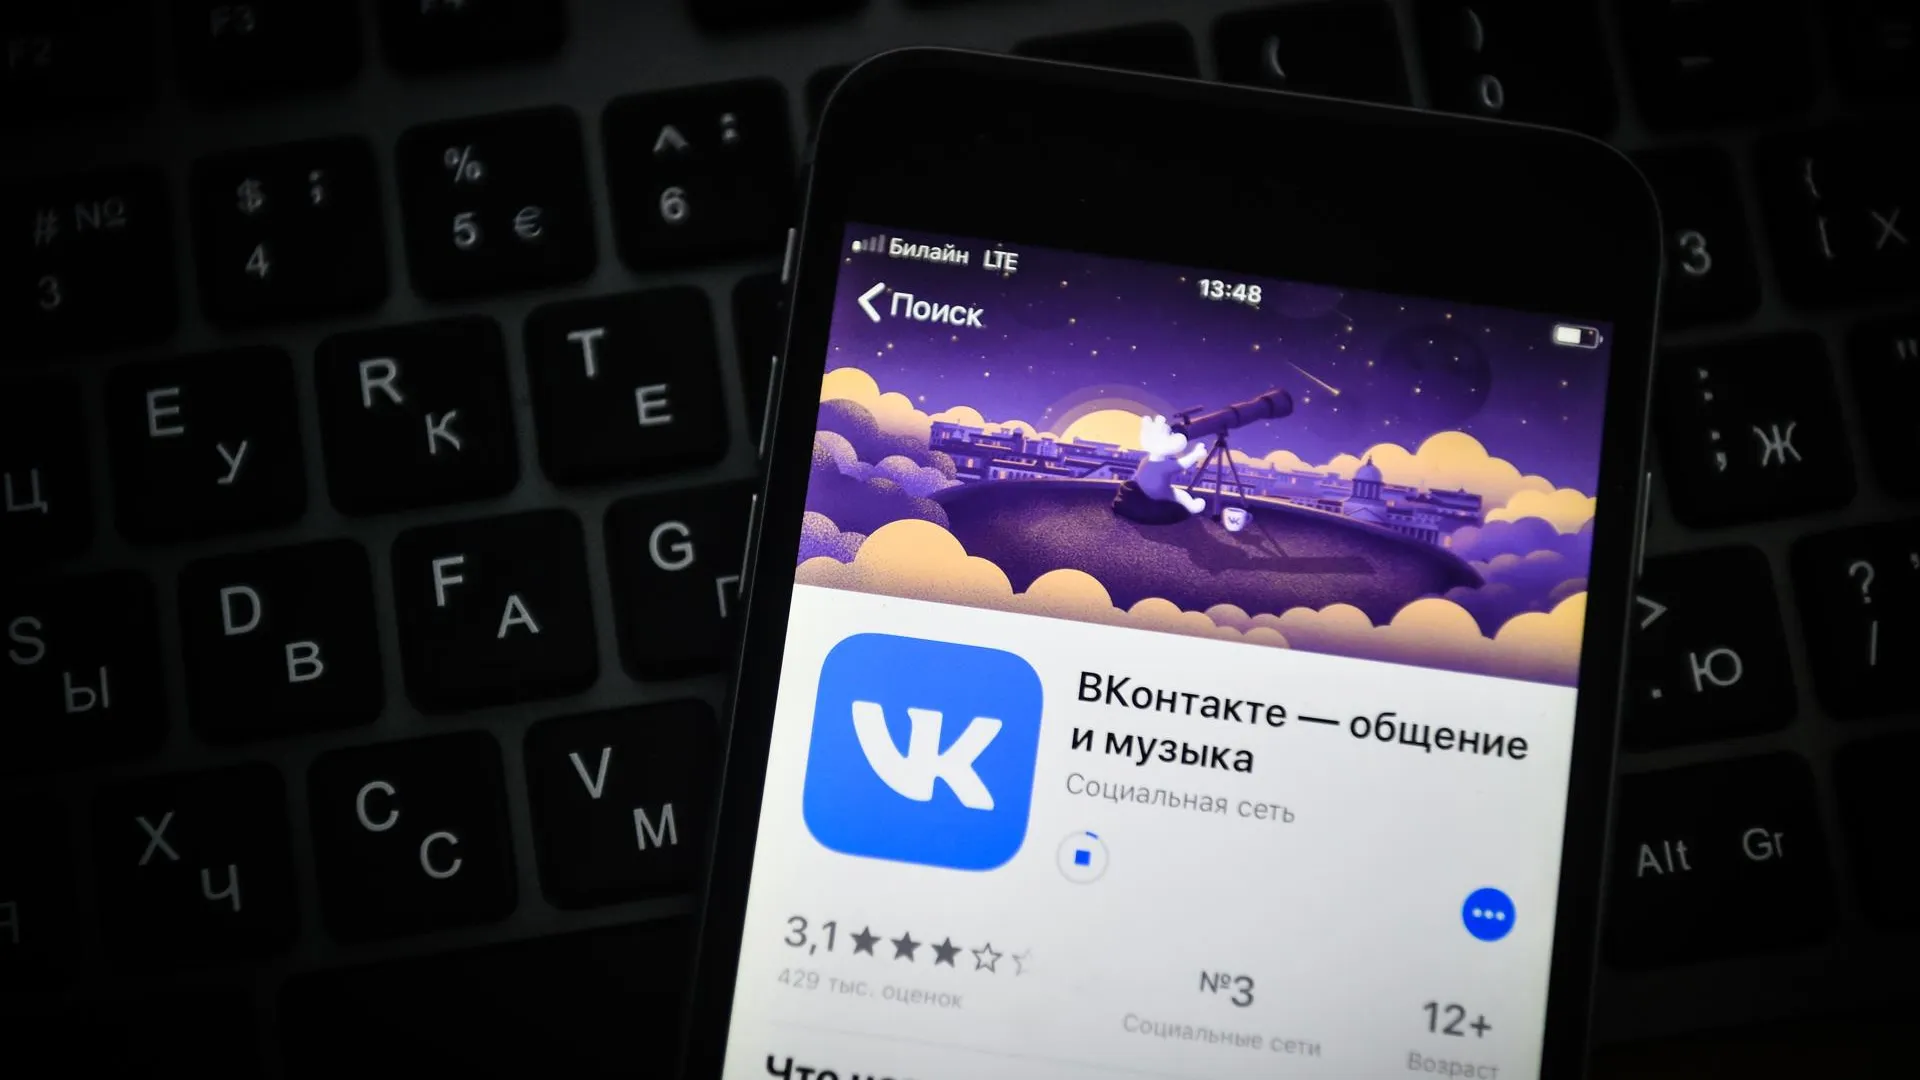 VK купил 25% акций цифрового банка «Точка» за 11,6 млрд рублей